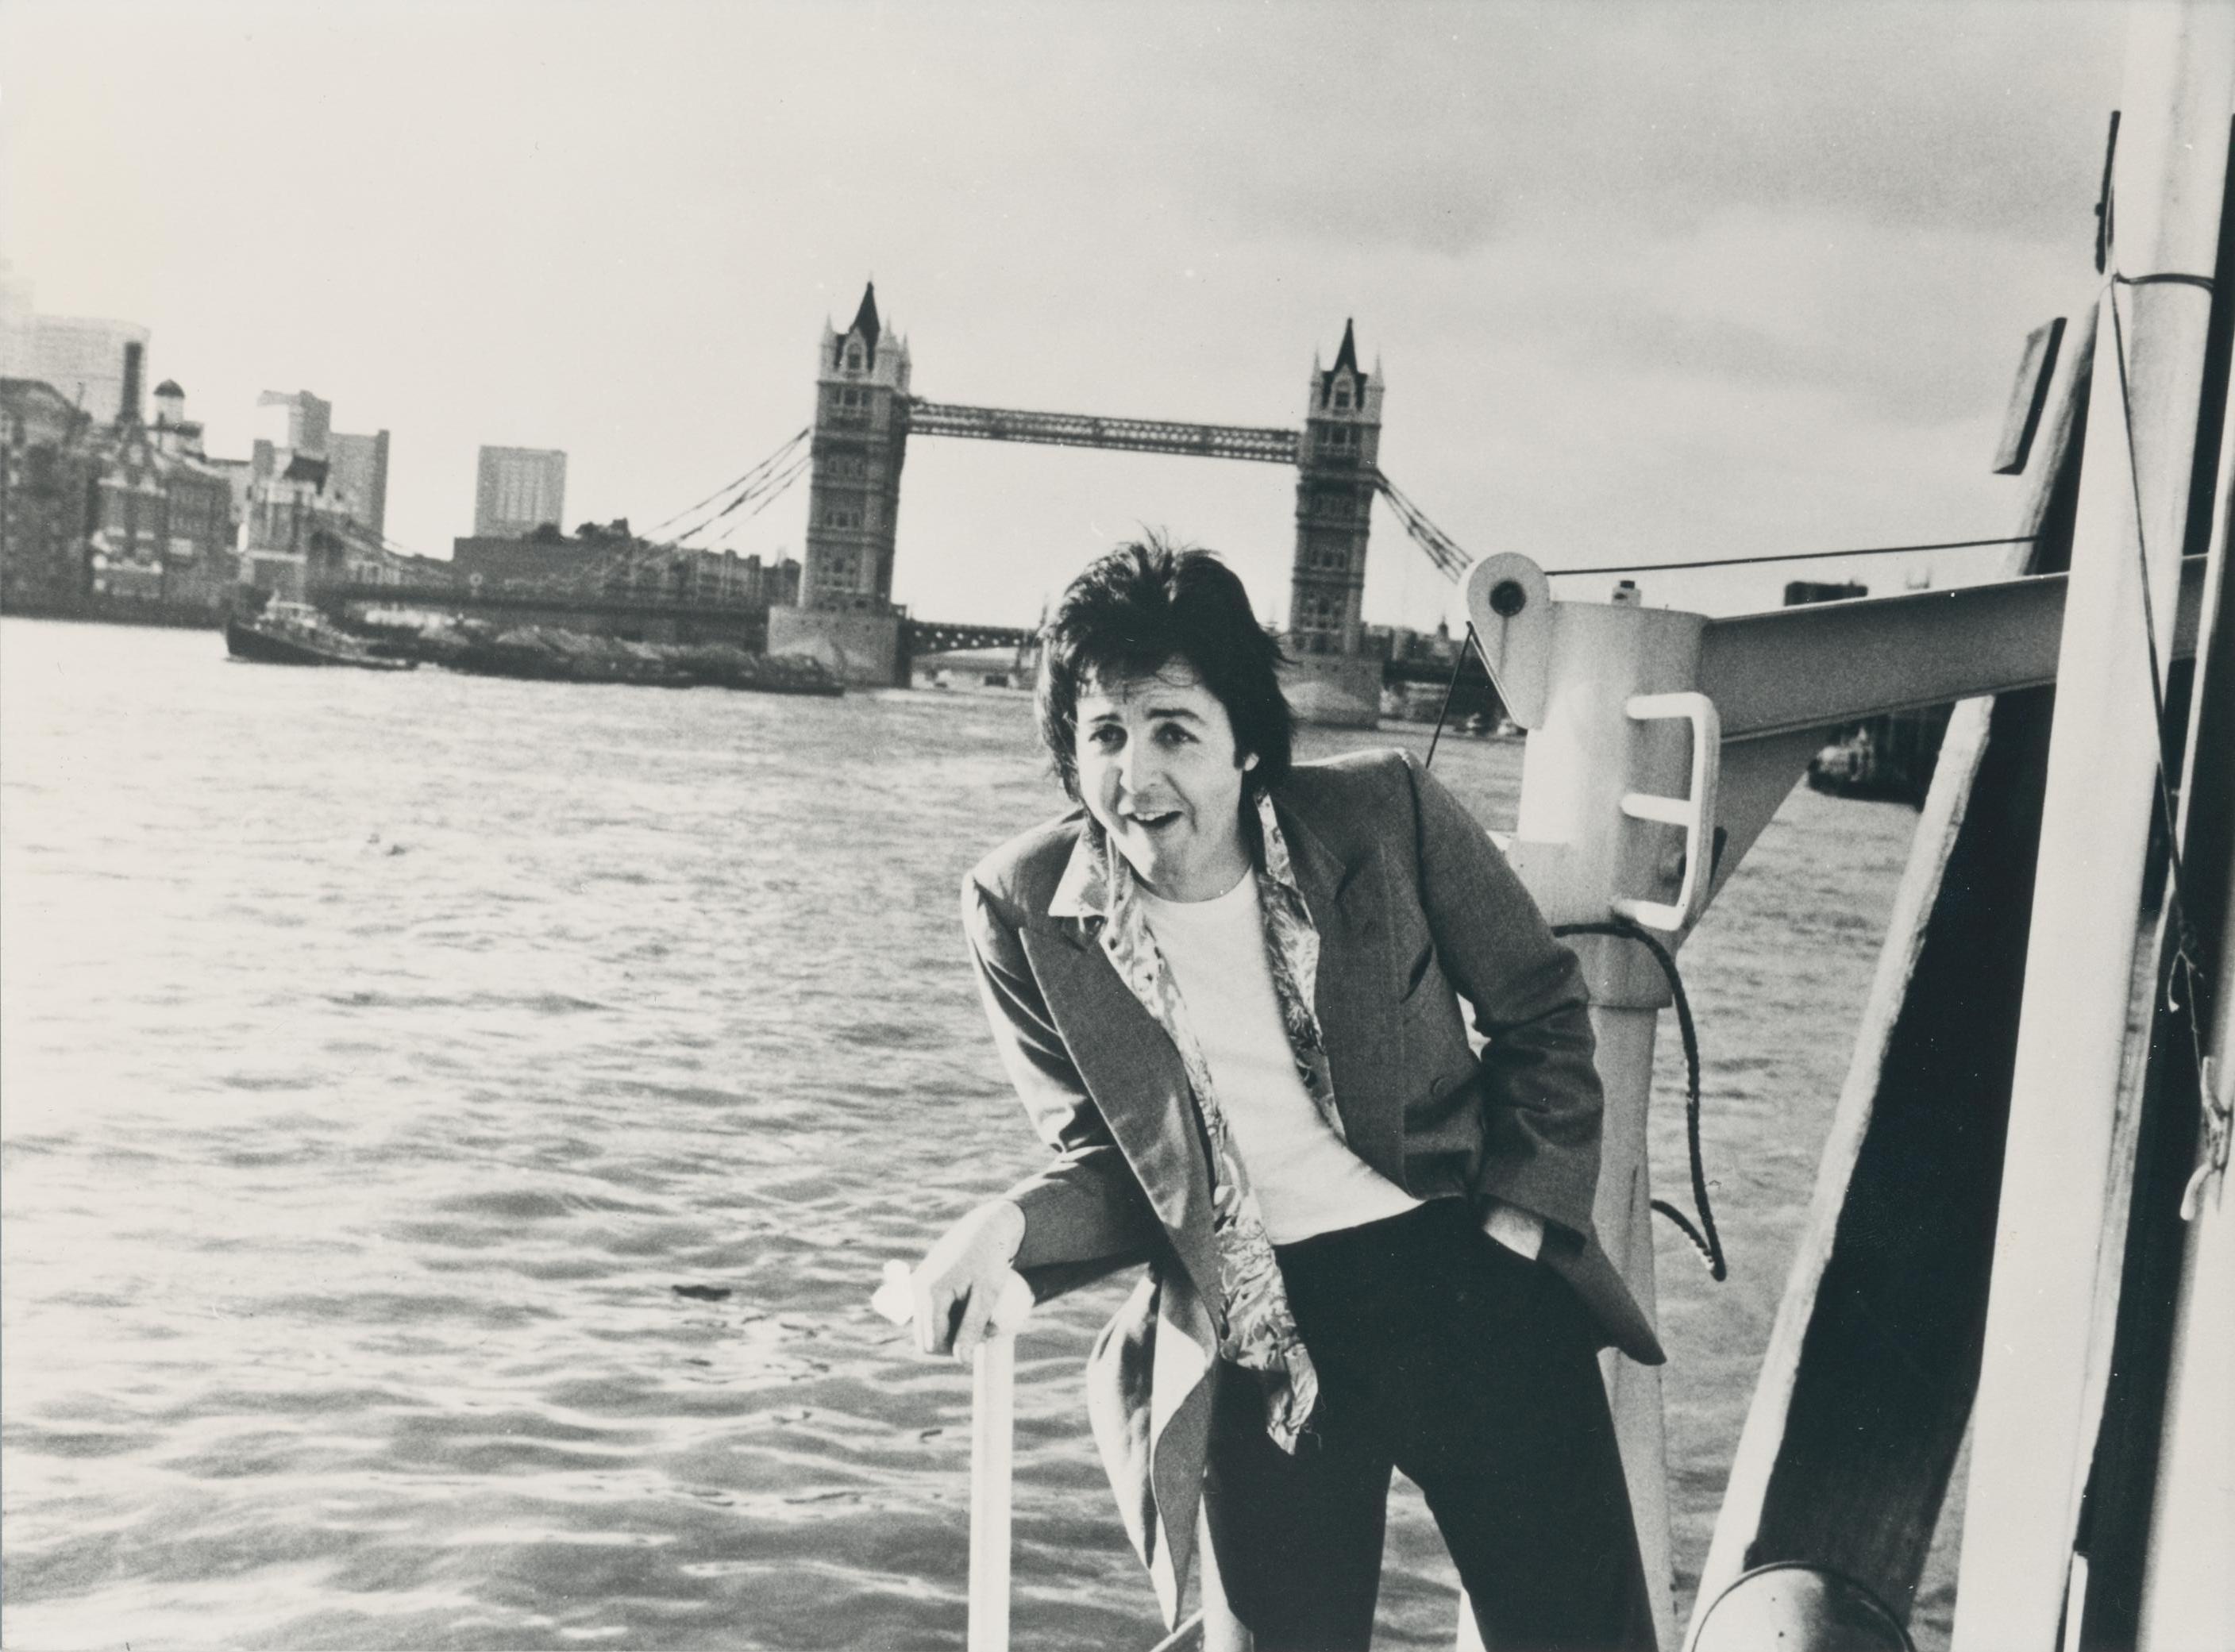 Henry Grossman Portrait Photograph - Paul McCartney, London Bridge, Black and White Photography, 17, 6 x 23, 8 cm